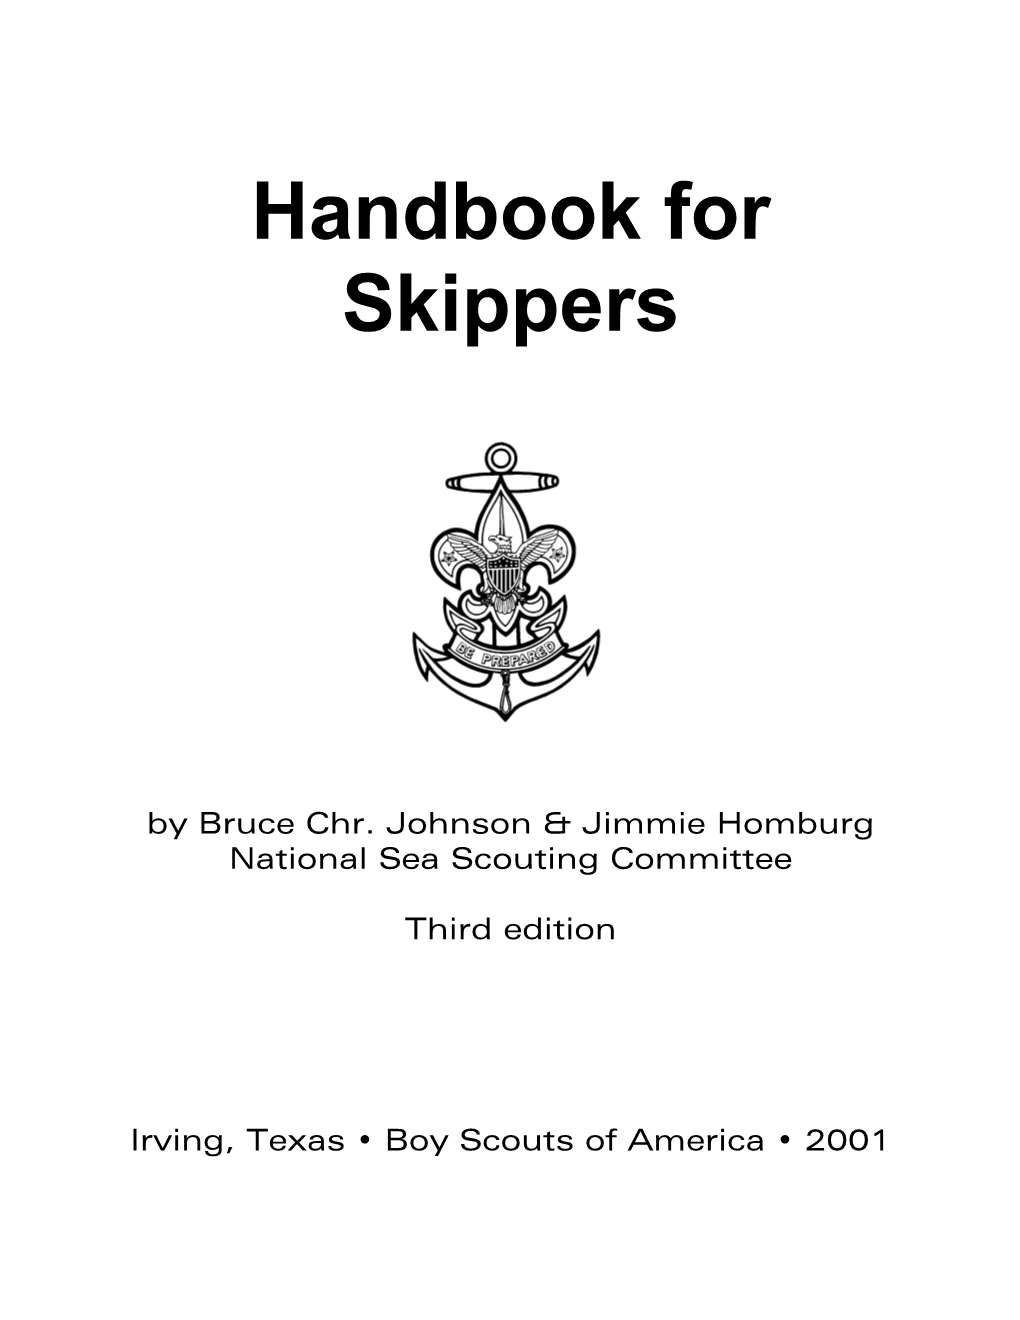 Handbook for Skippers